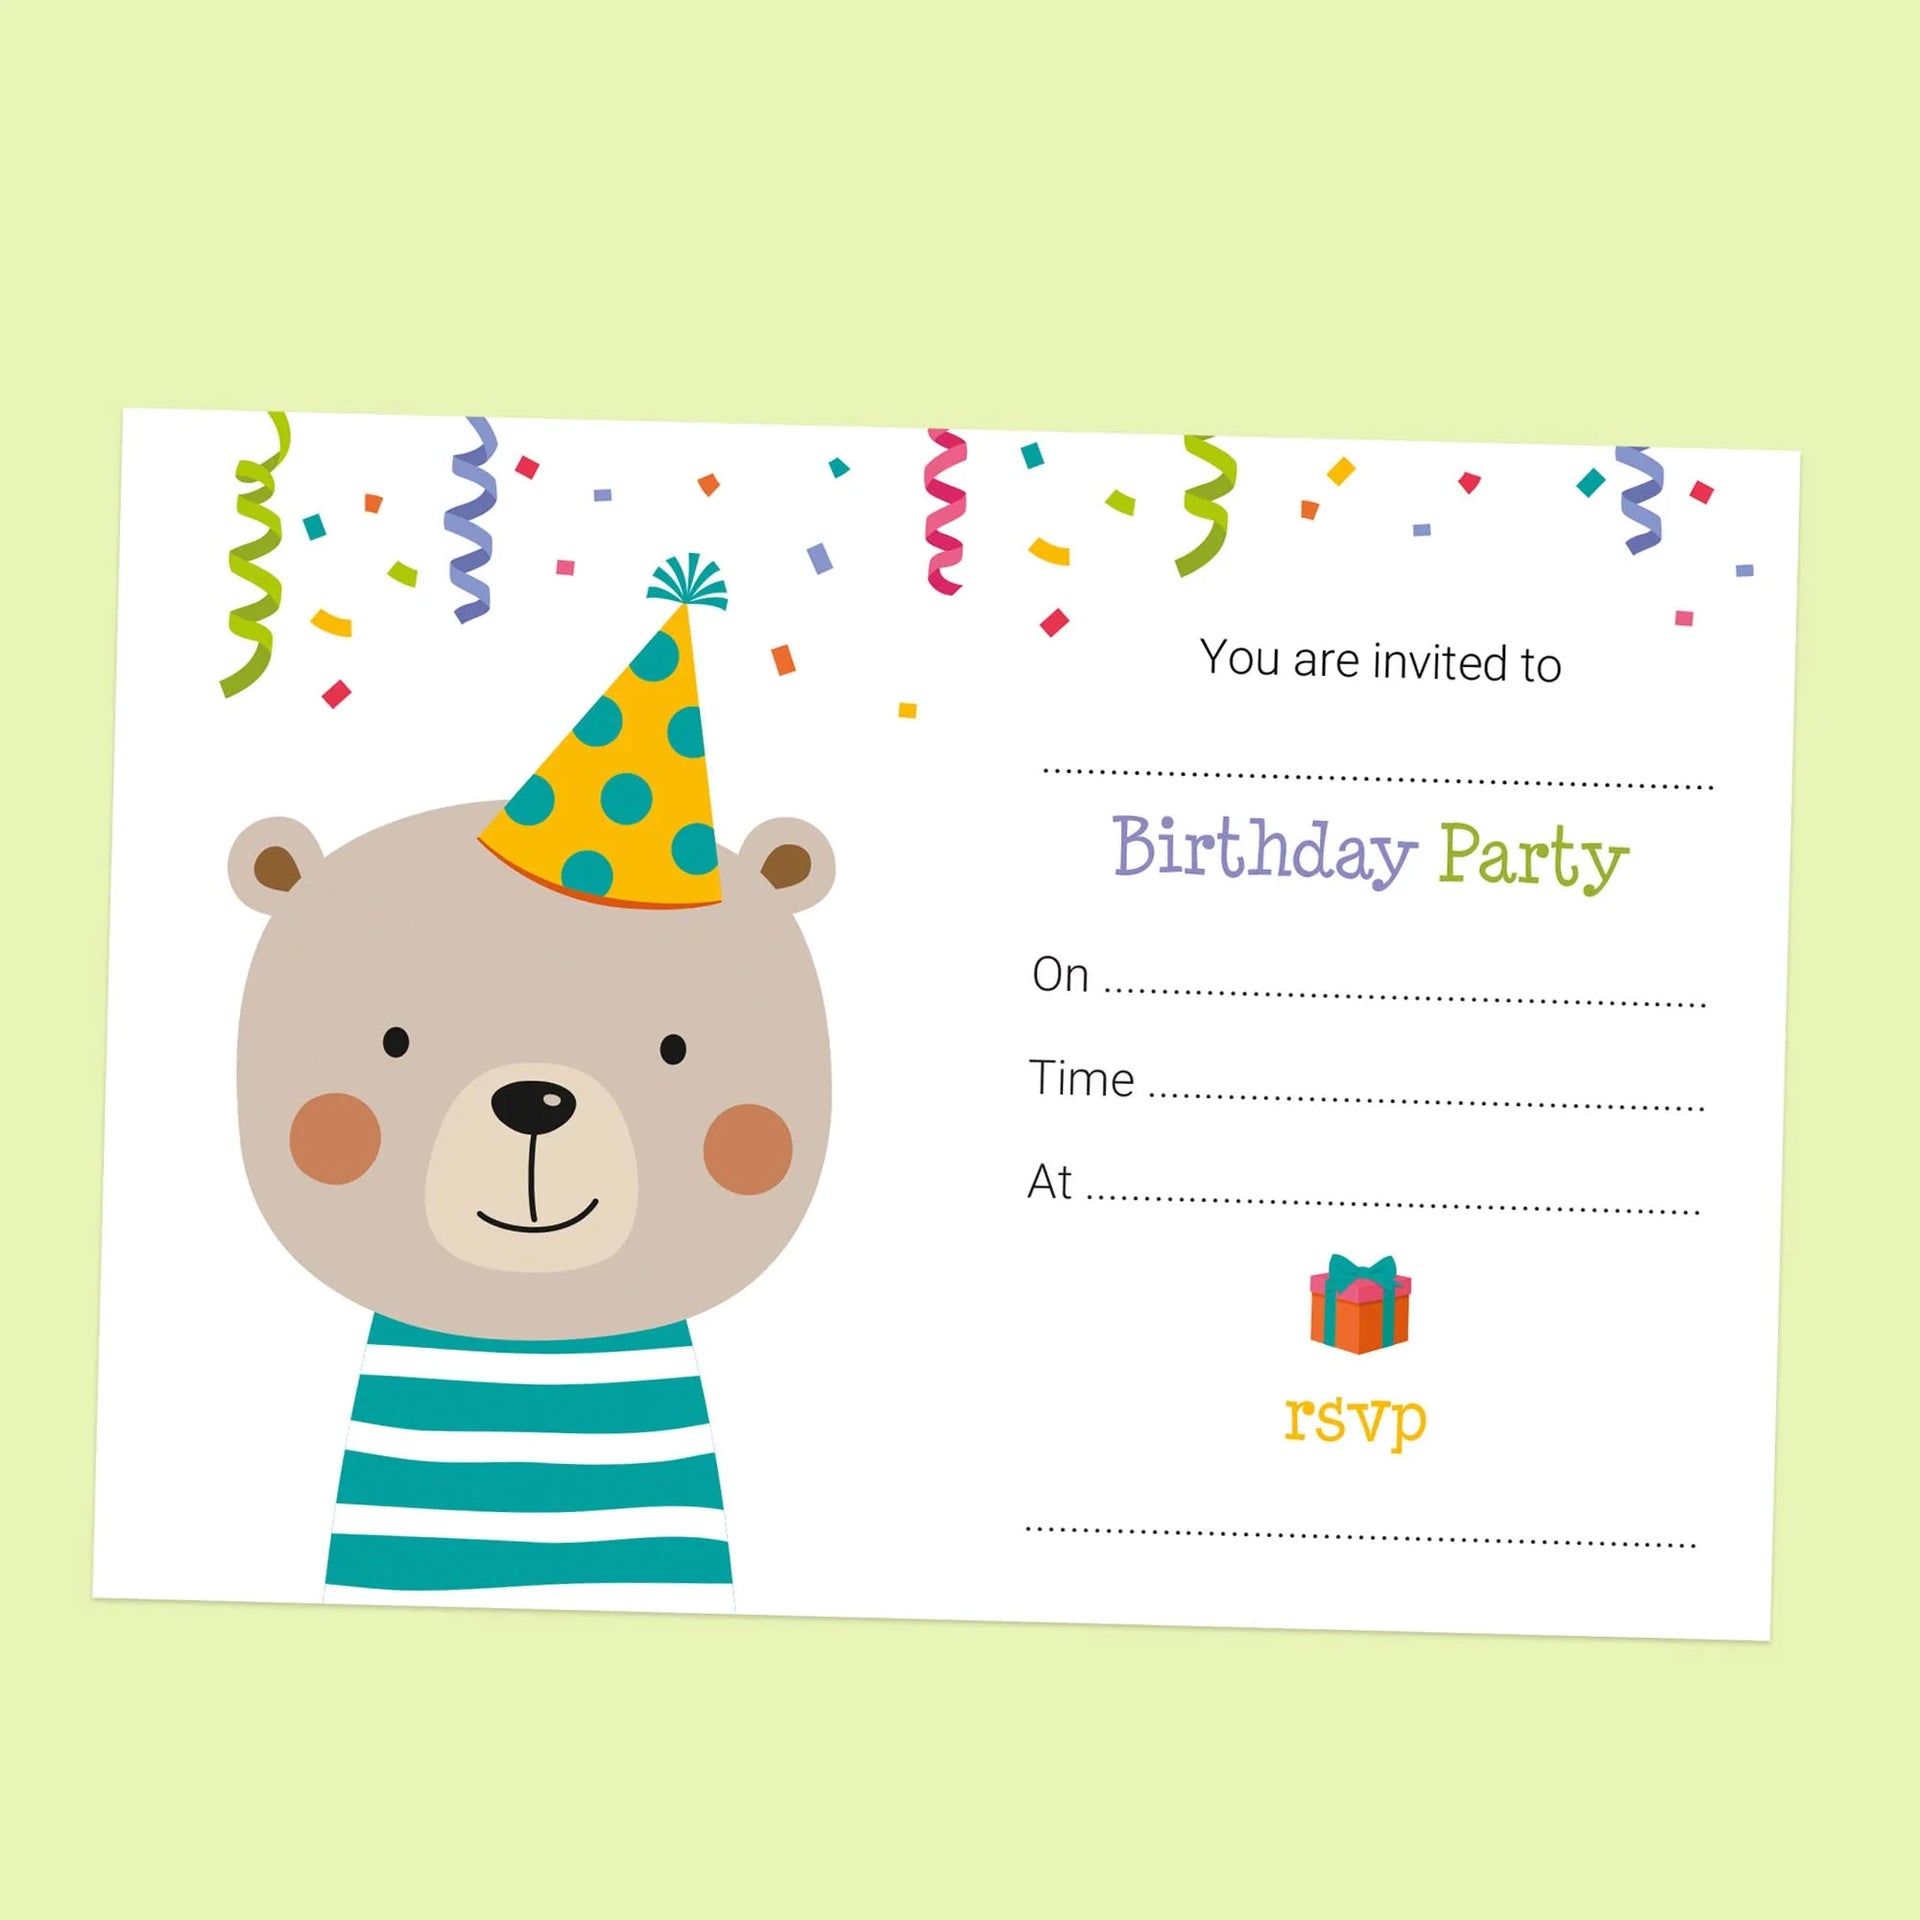 How Do You Respond to a Birthday Invitation RSVP?